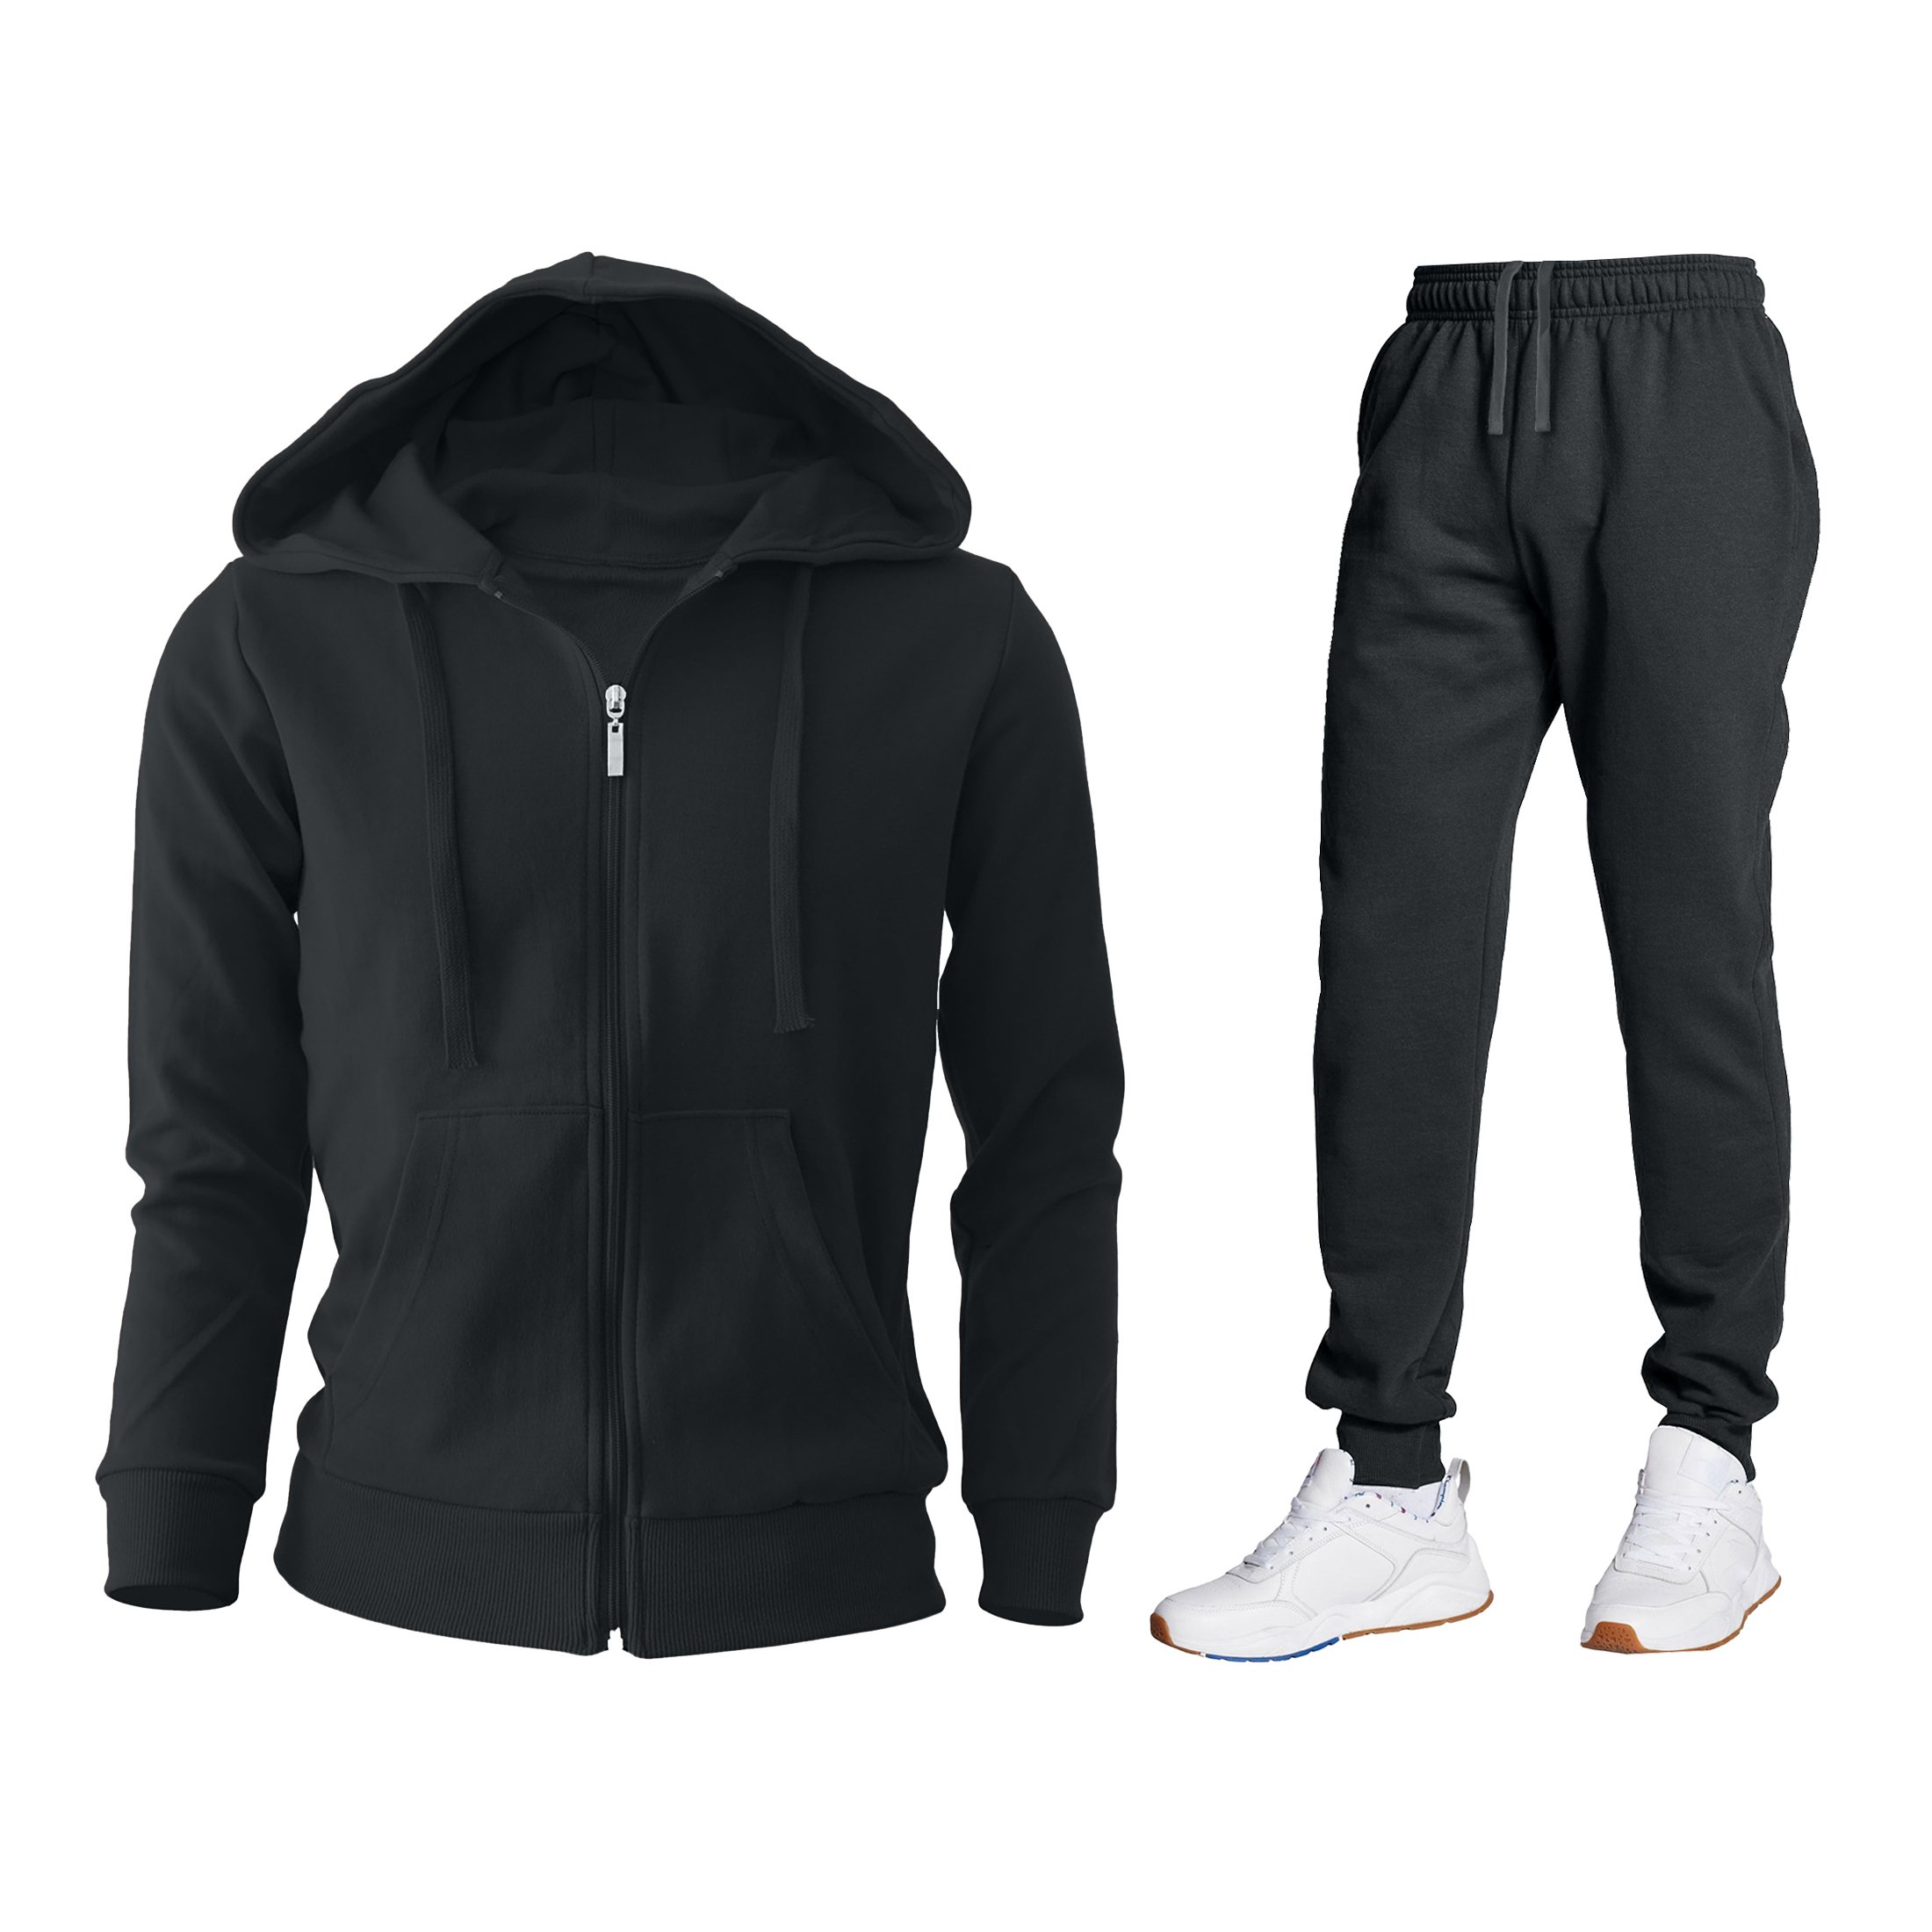 Men's Casual Jogging Suit Track Sports Zip Up Jogger Set - S